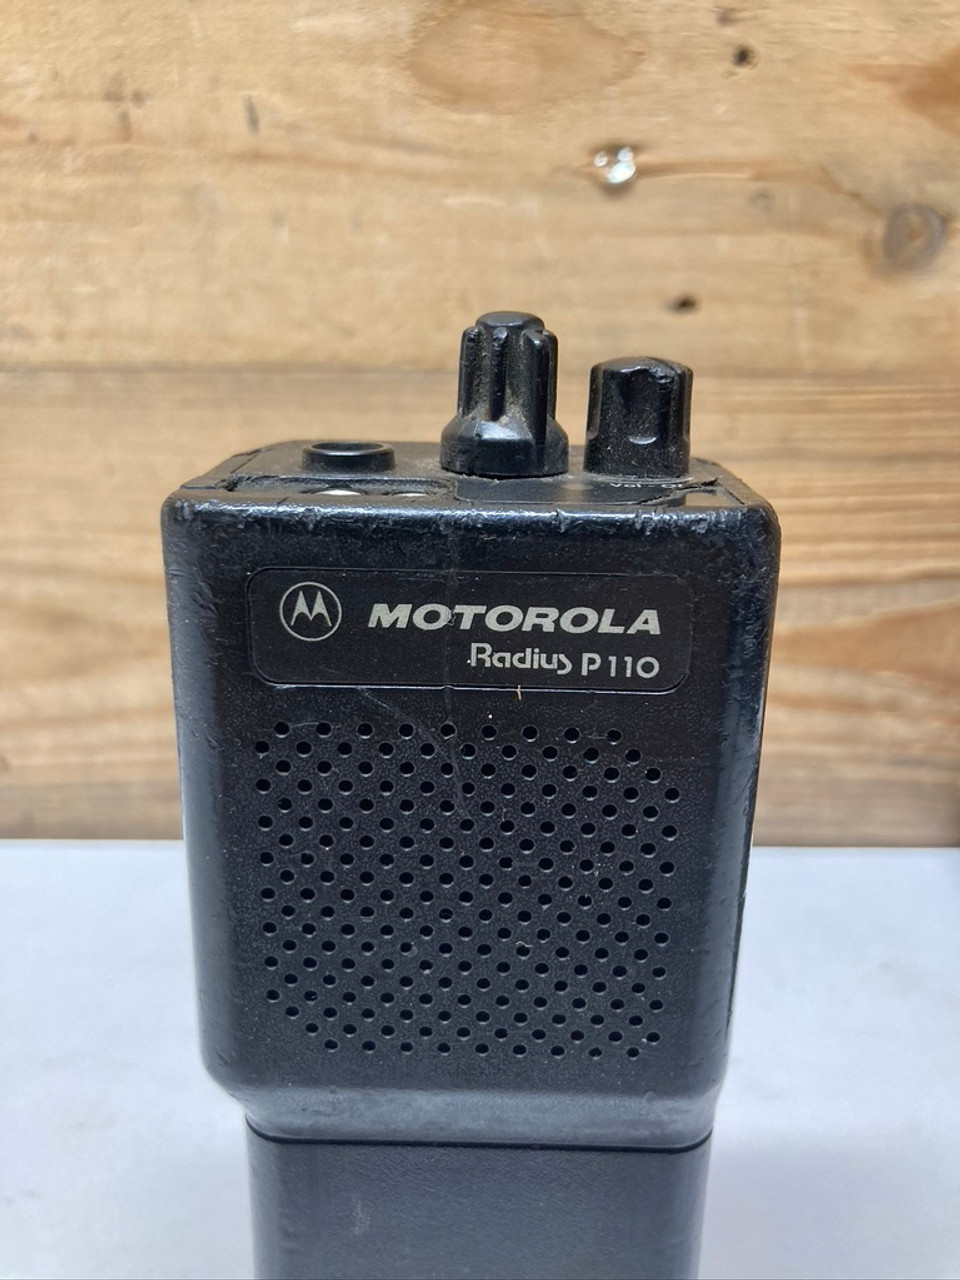 Motorola Radius P110 Two-Way Portable Radio Lot of 2